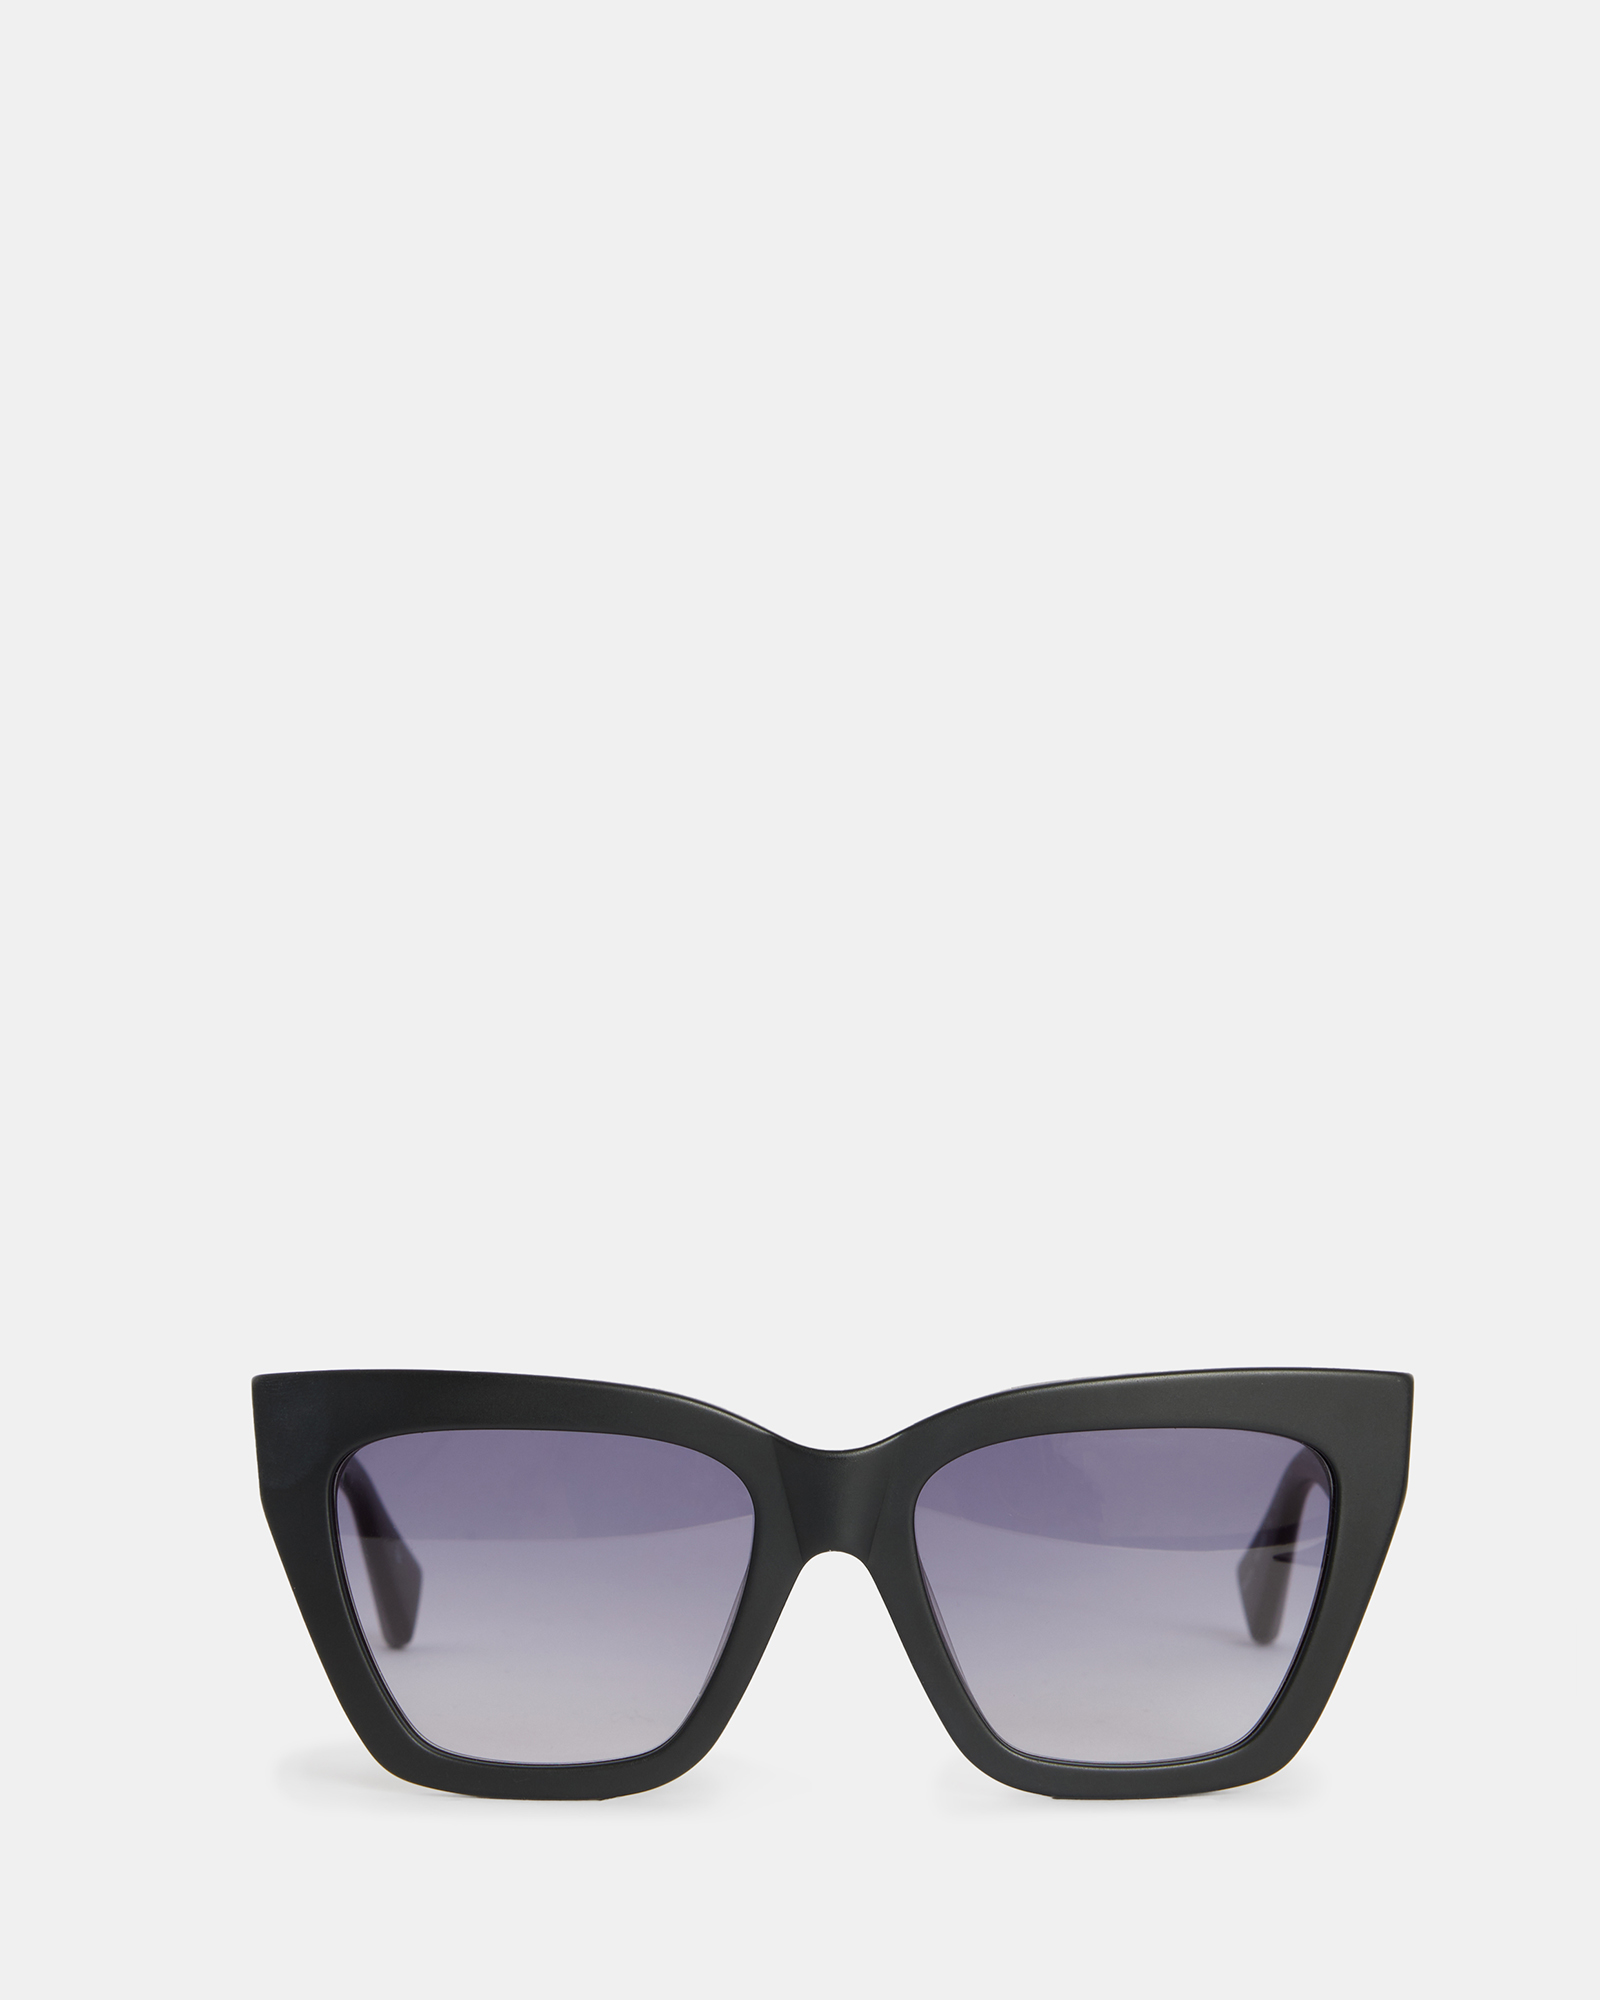 AllSaints Minerva Cat Eye Sunglasses,, Size: One